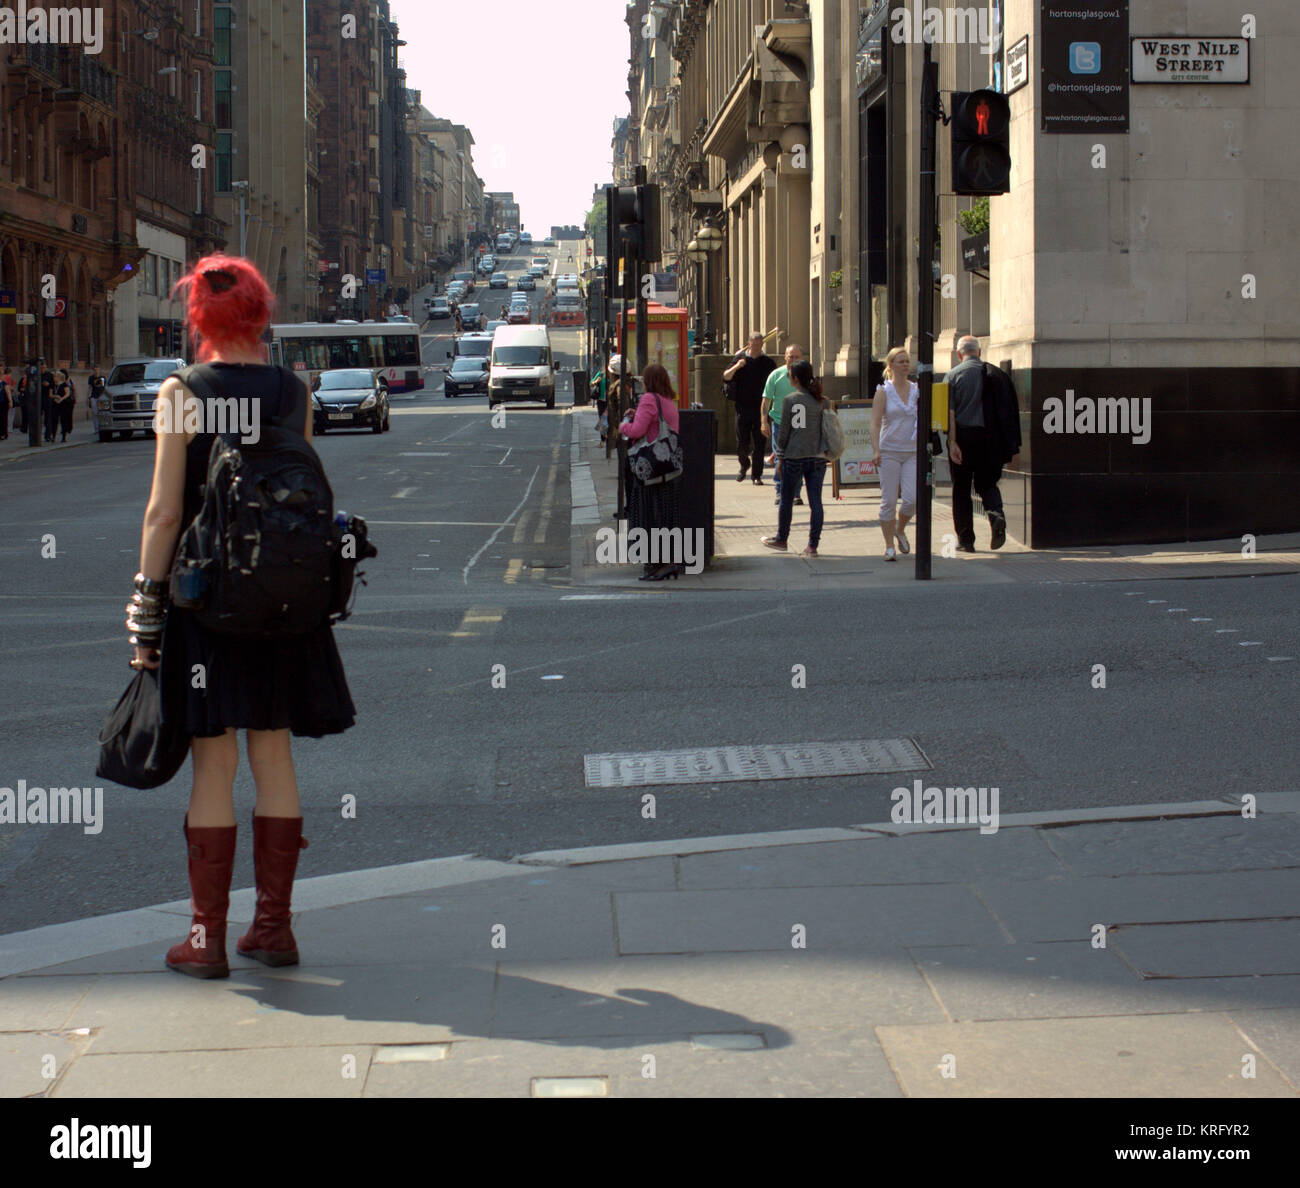 strange girl woman on street corner with red hair people walking sunny everyday British street scene Gordon Street Glasgow Stock Photo